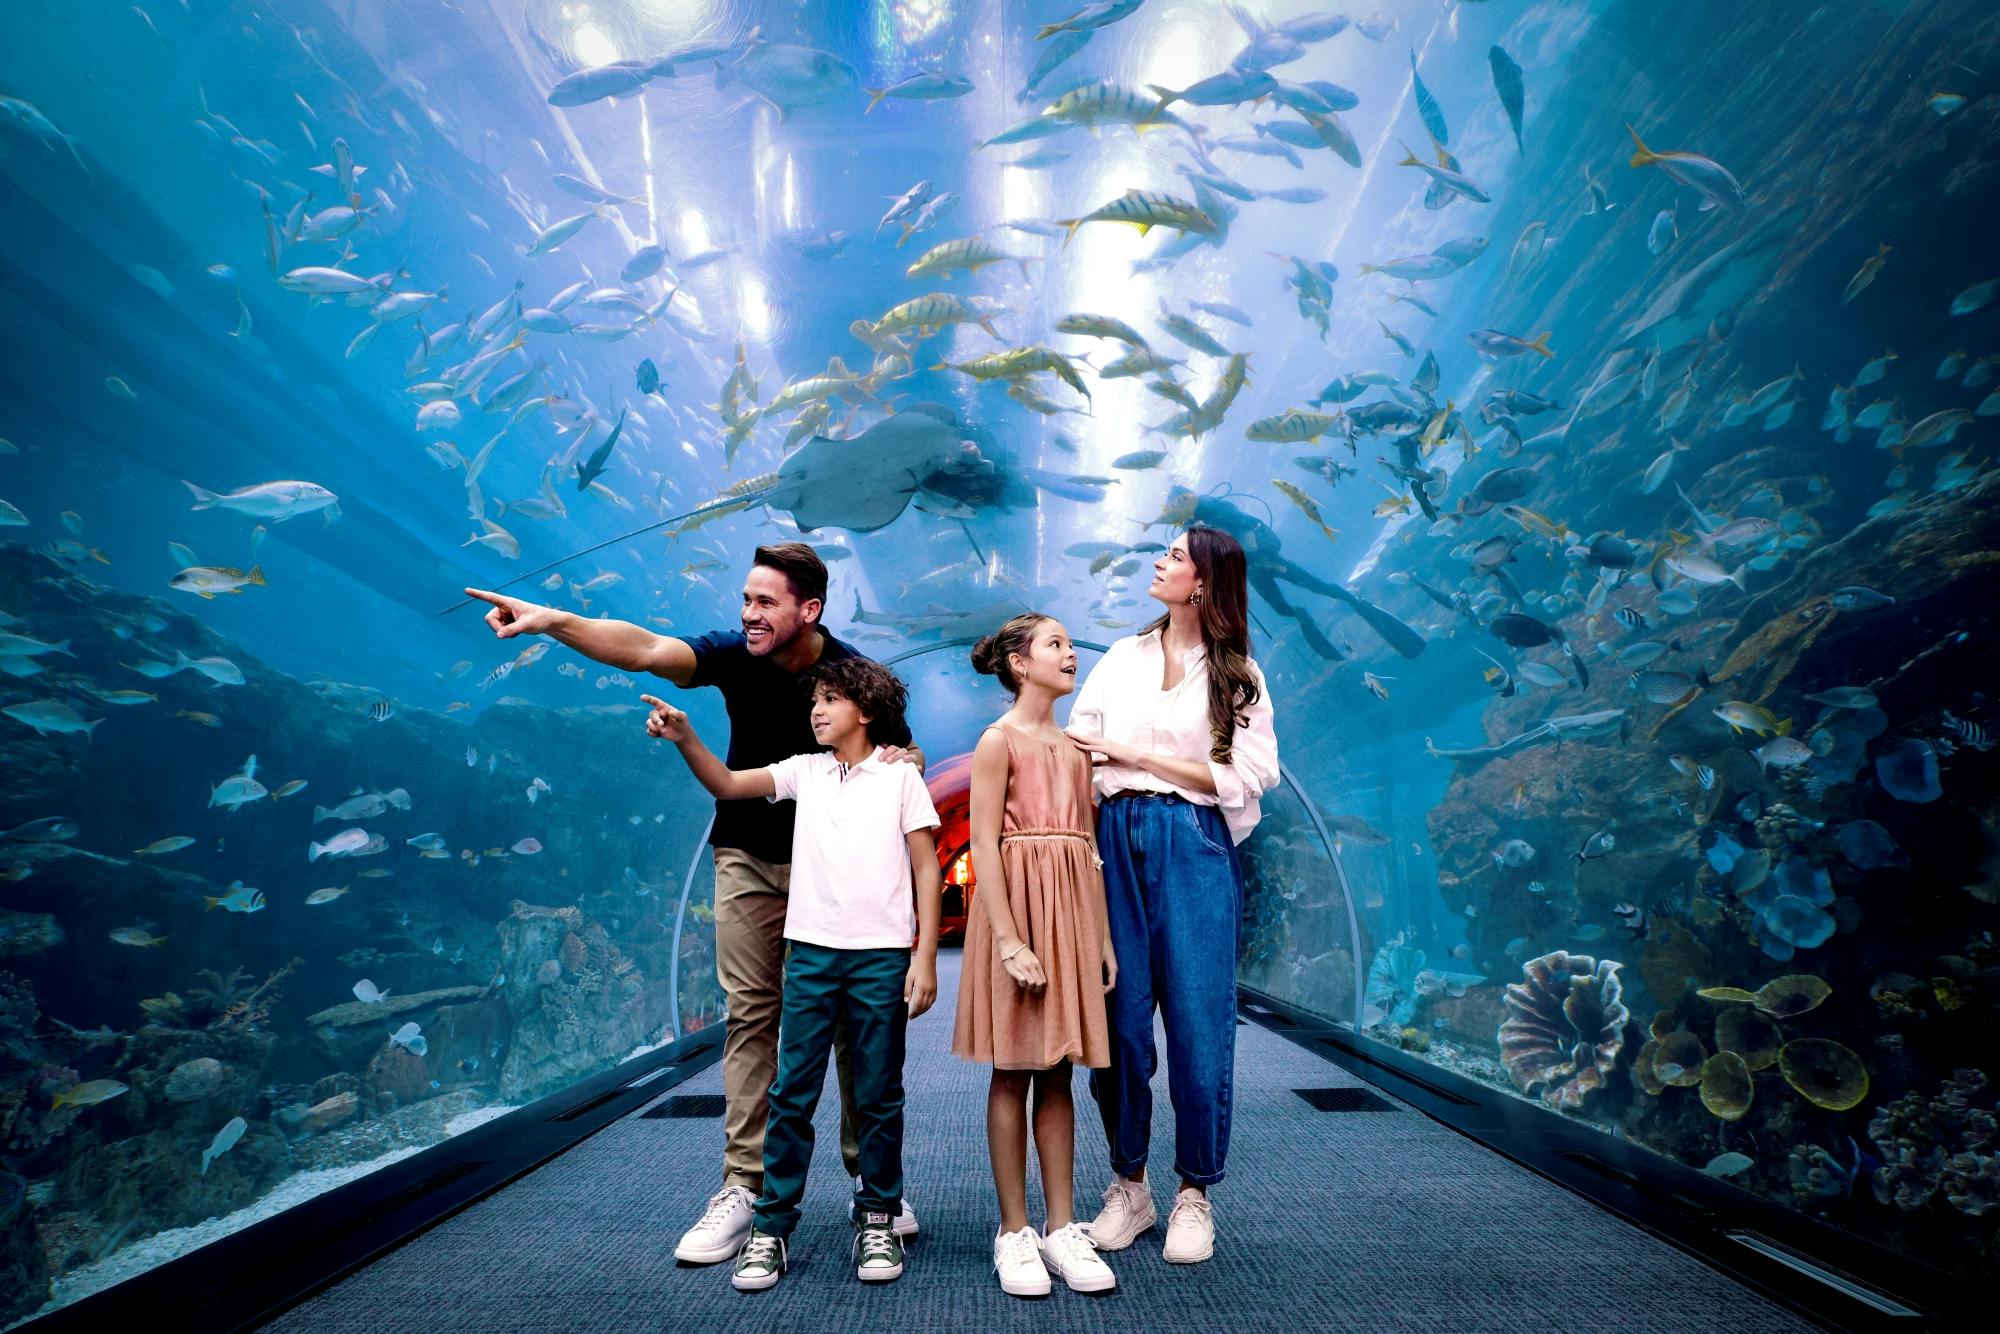 Burj Khalifa Floors 124, 125 and Dubai Aquarium tickets